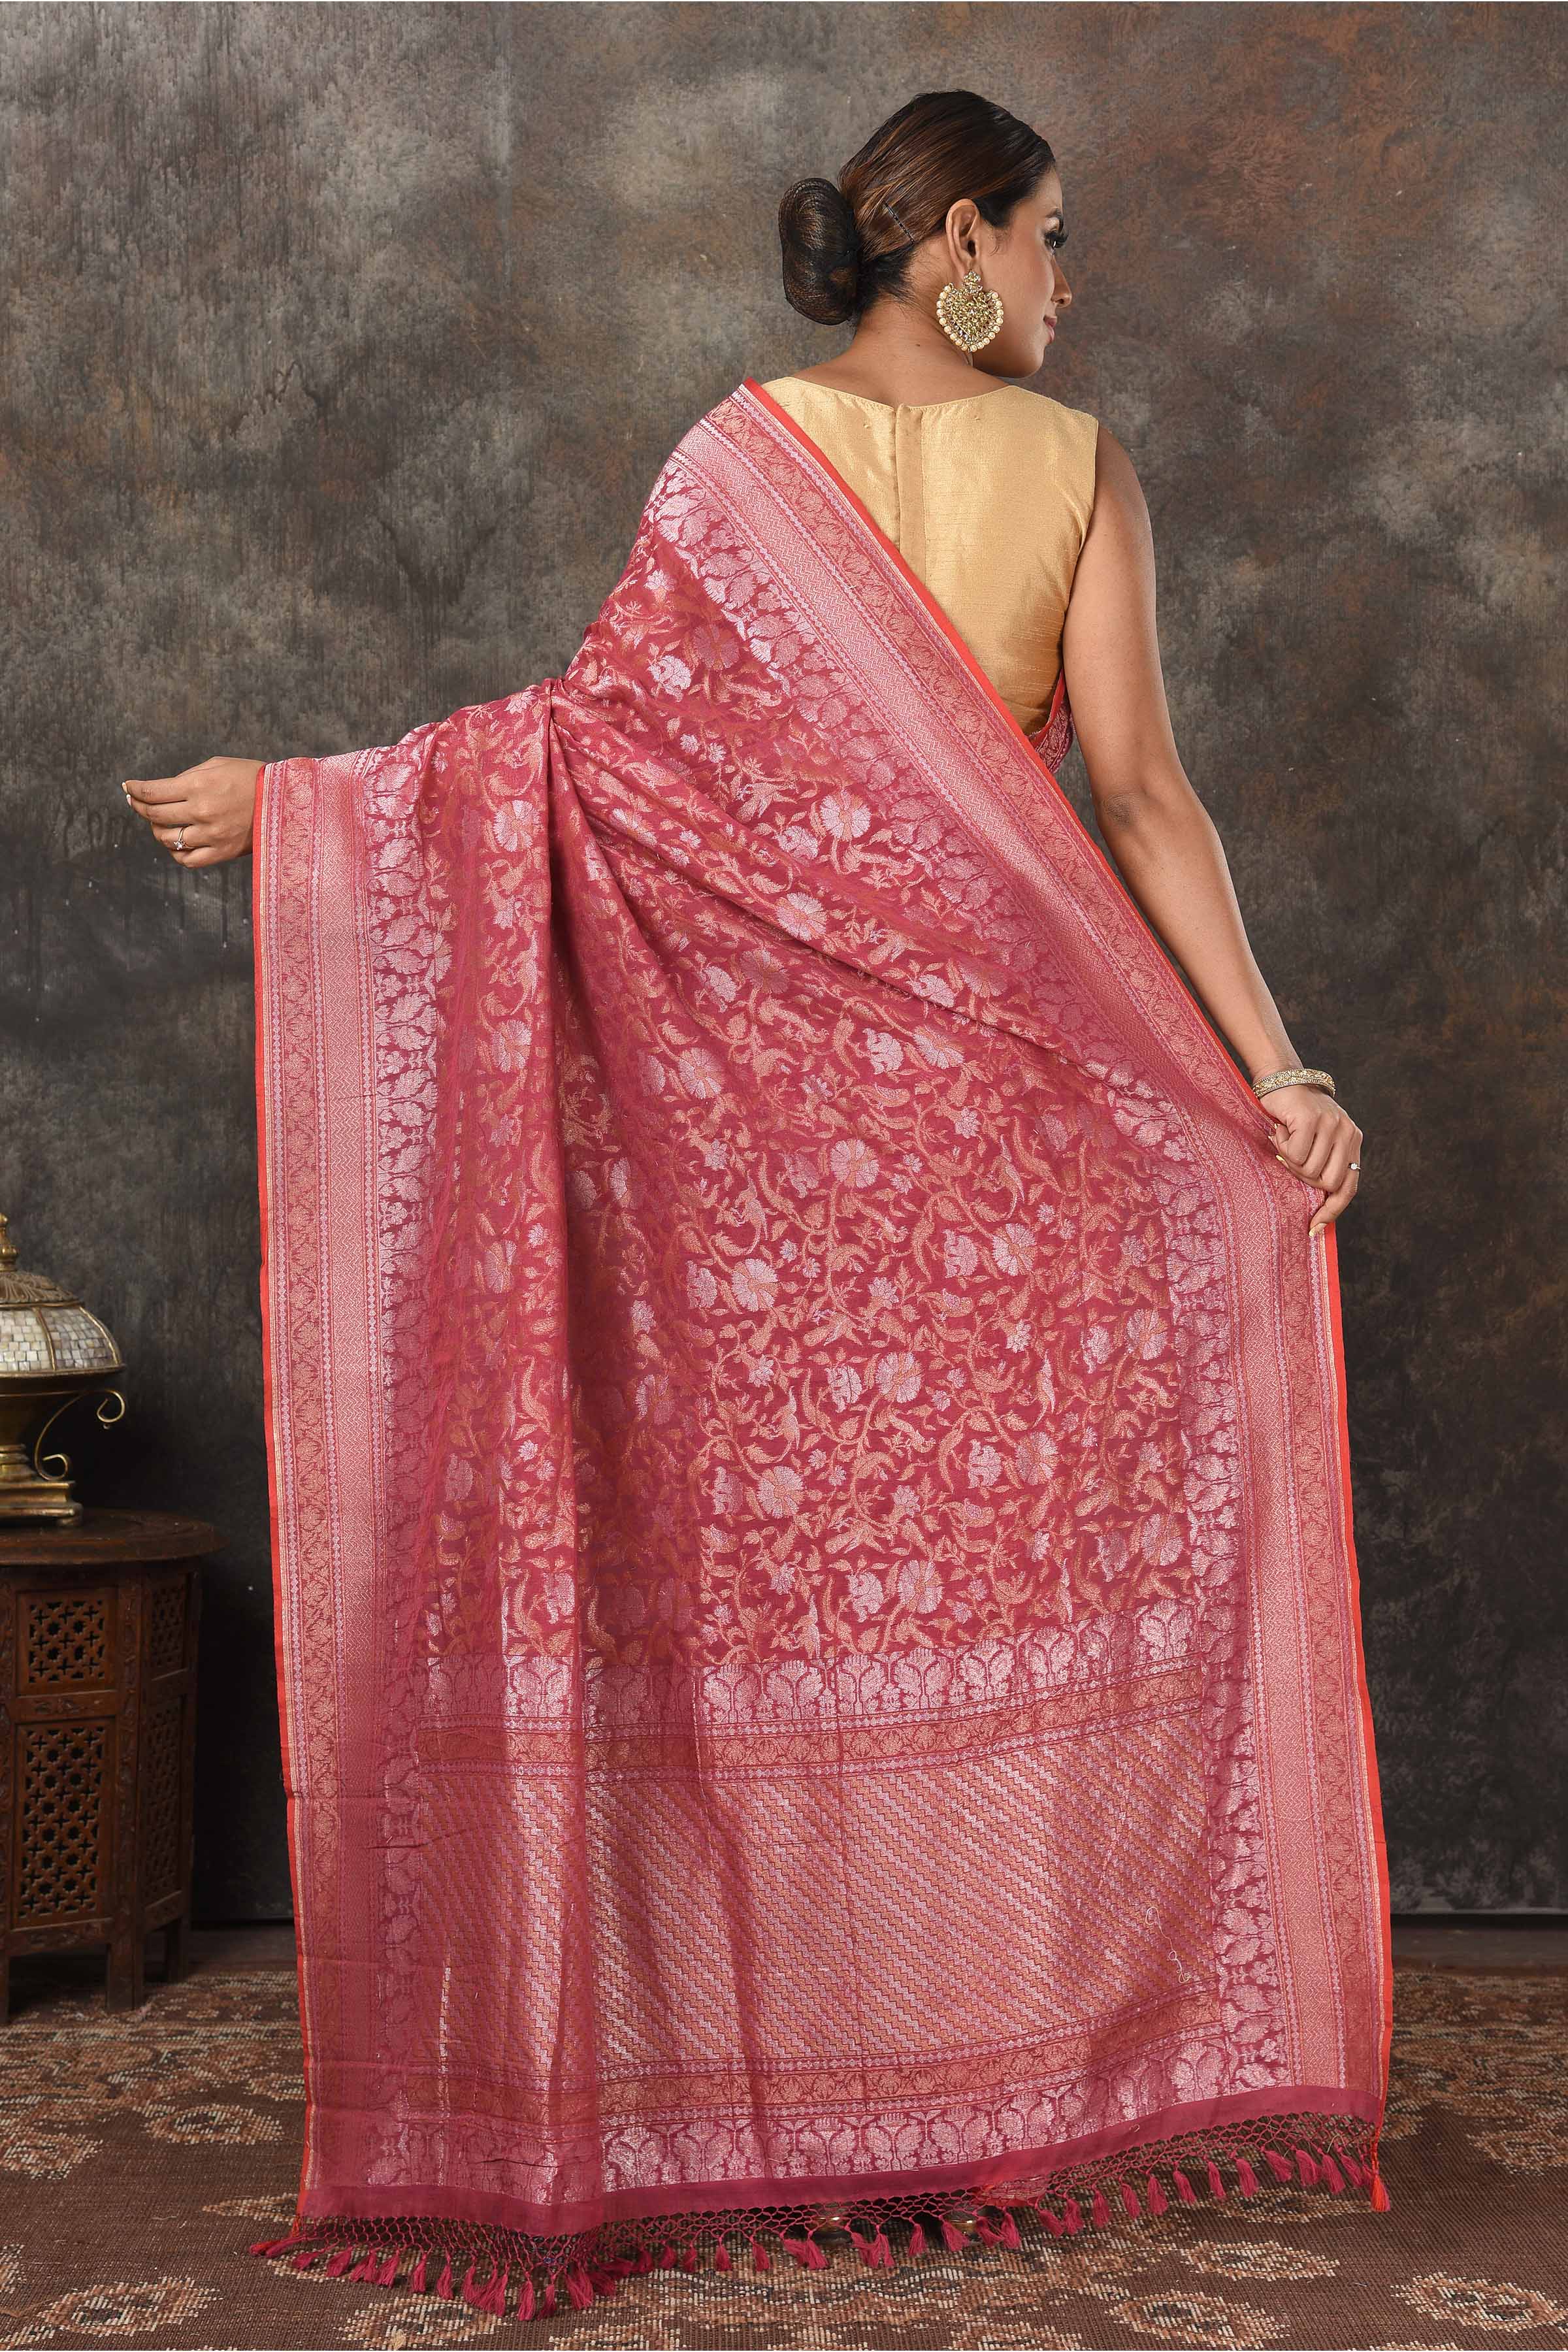 Shop stunning pink Jamdani Banarasi sari online in USA. Radiate elegance on special occasions in exquisite designer sarees, handwoven sarees, georgette sarees, embroidered sarees, Banarasi saree, pure silk saris, tussar sarees from Pure Elegance Indian saree store in USA.-back